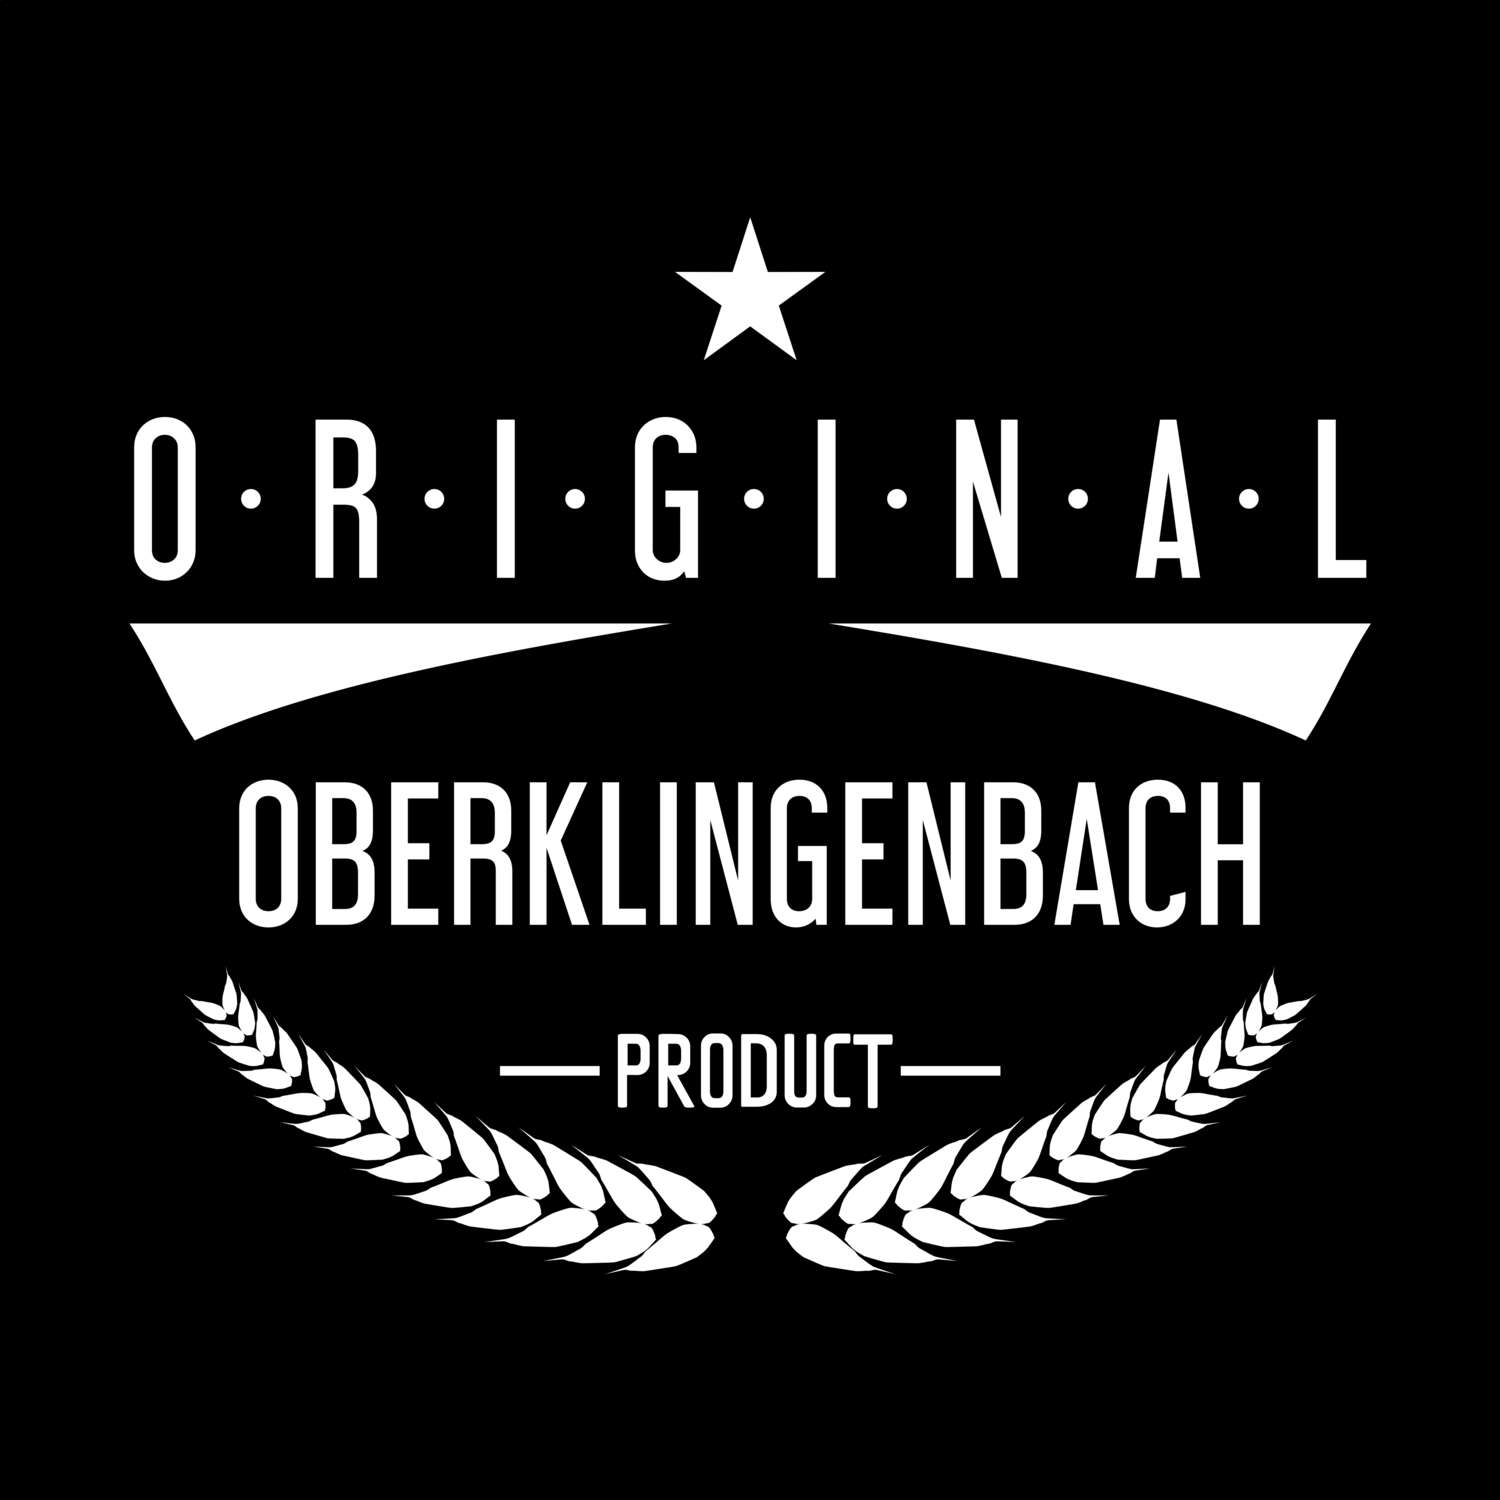 Oberklingenbach T-Shirt »Original Product«